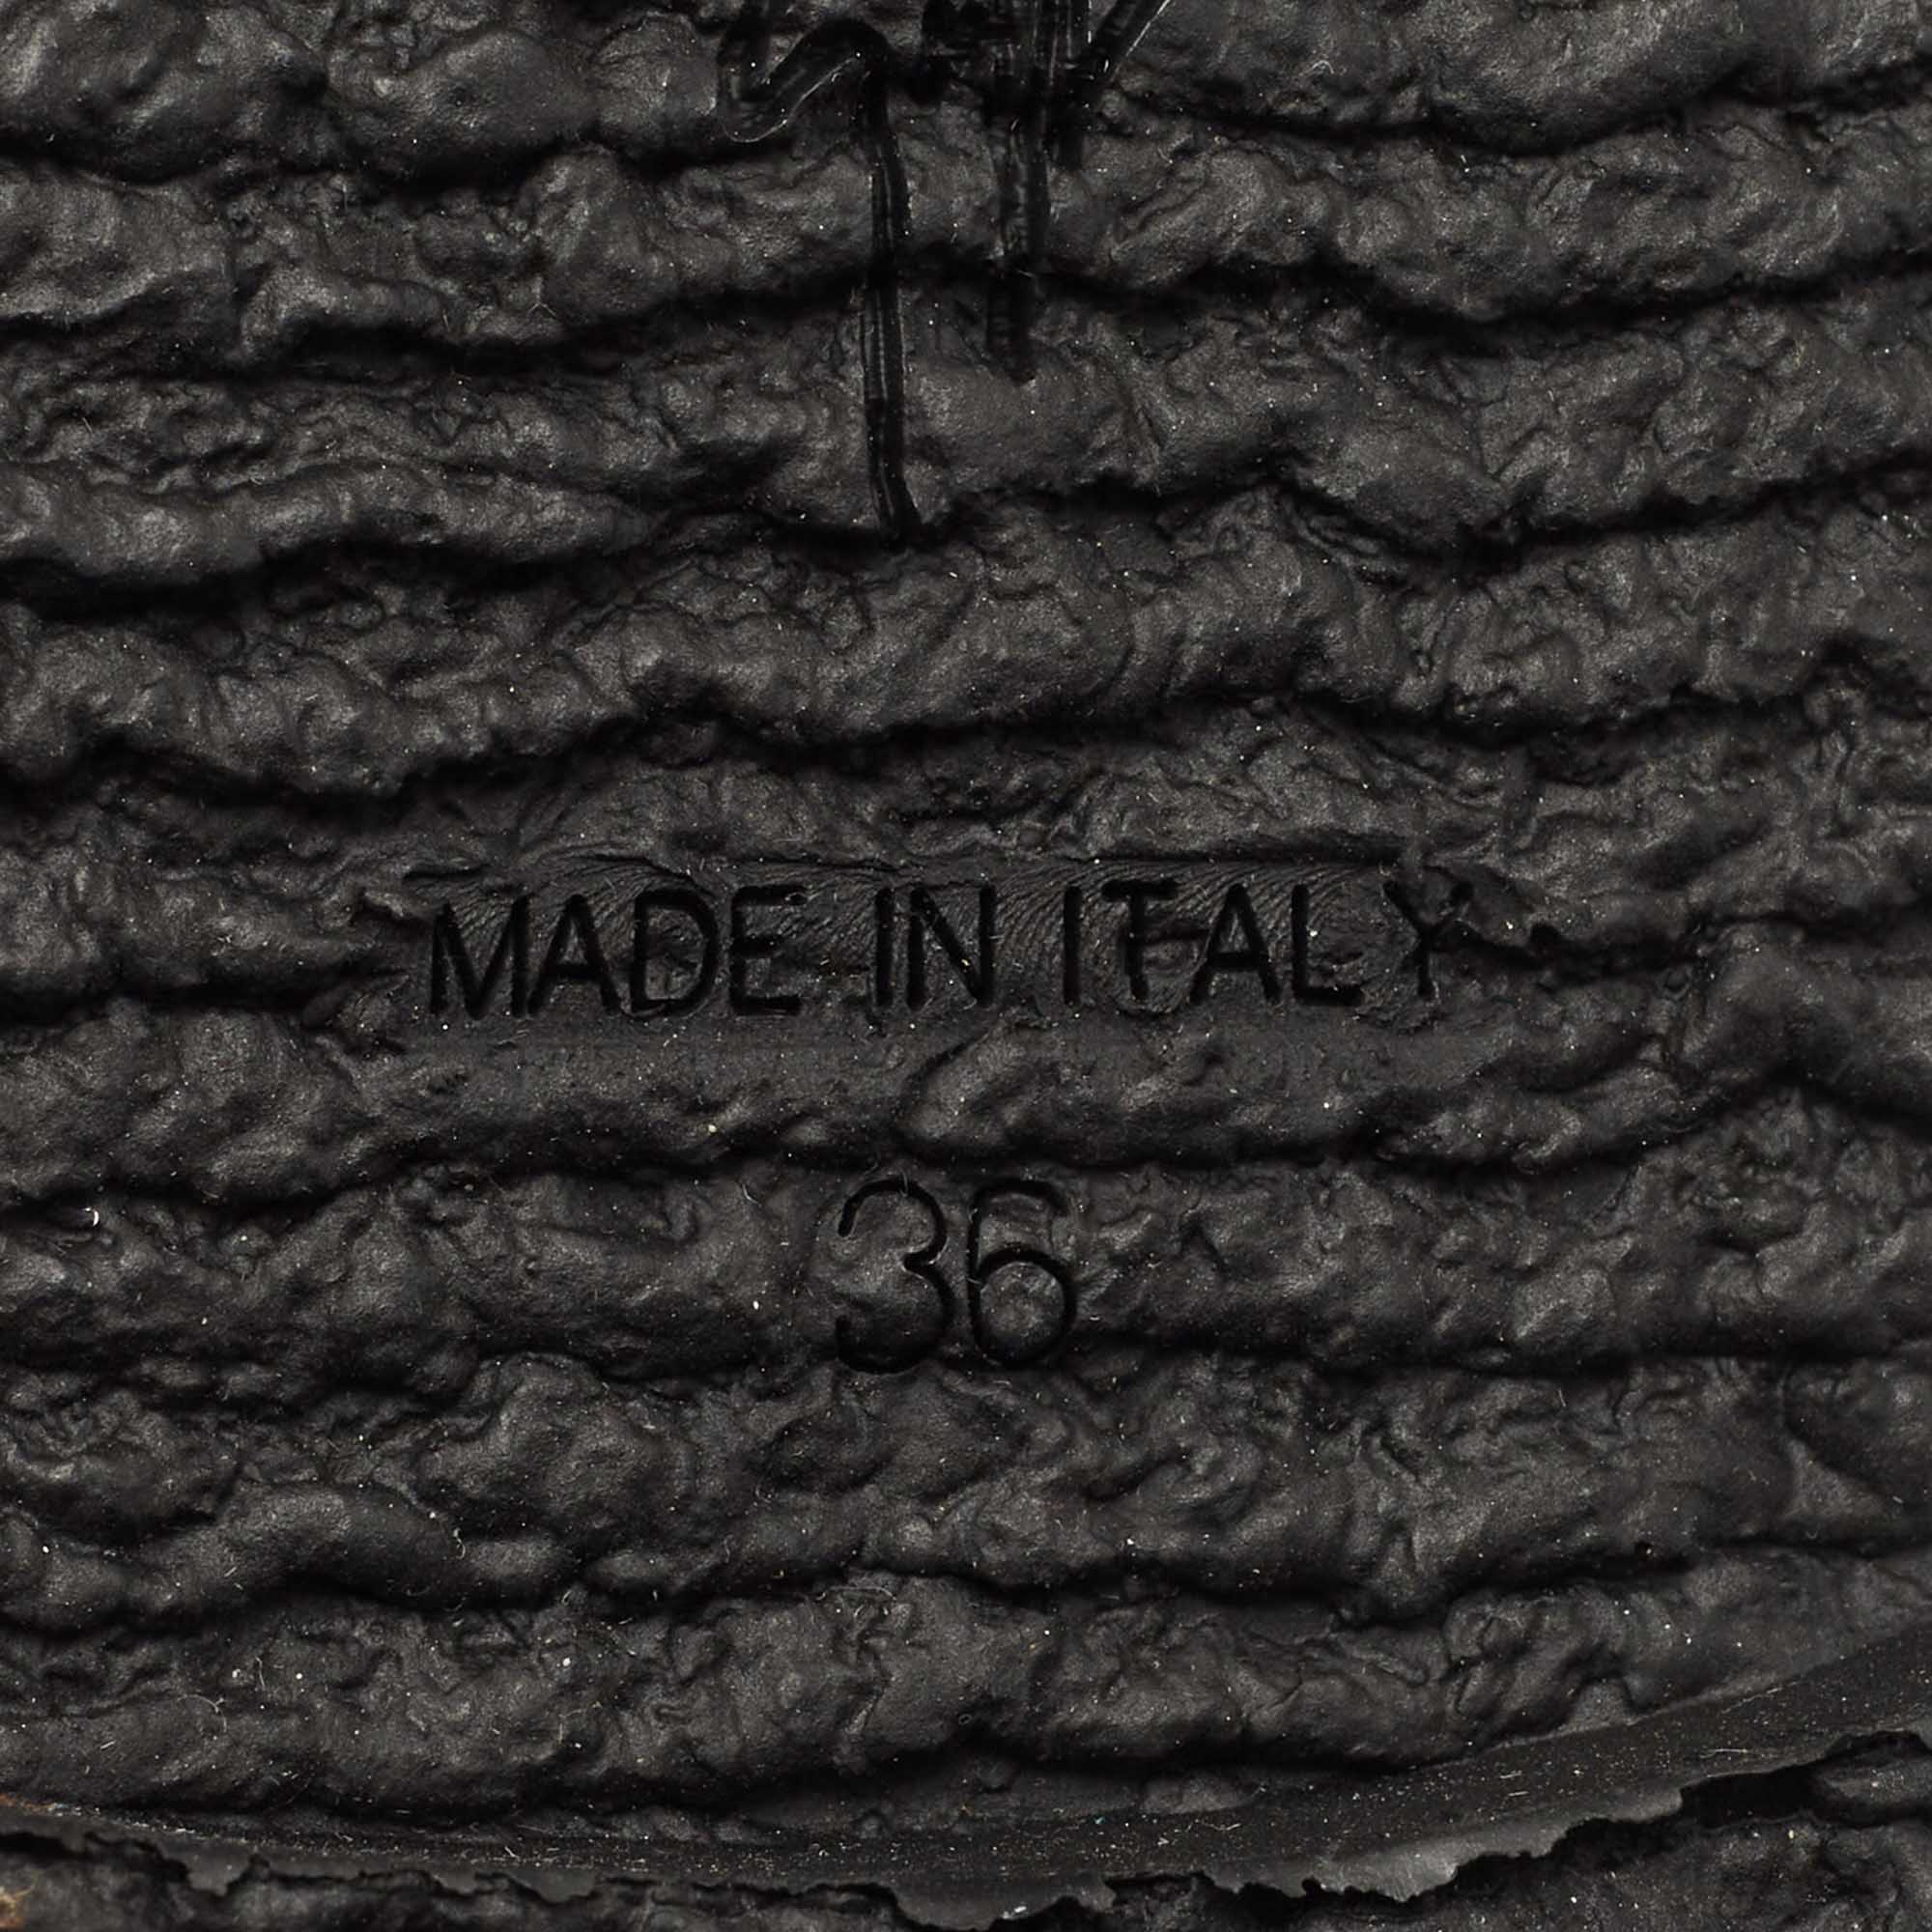 Giuseppe Zanotti Black Leather Monk Strap Oxford Size 36